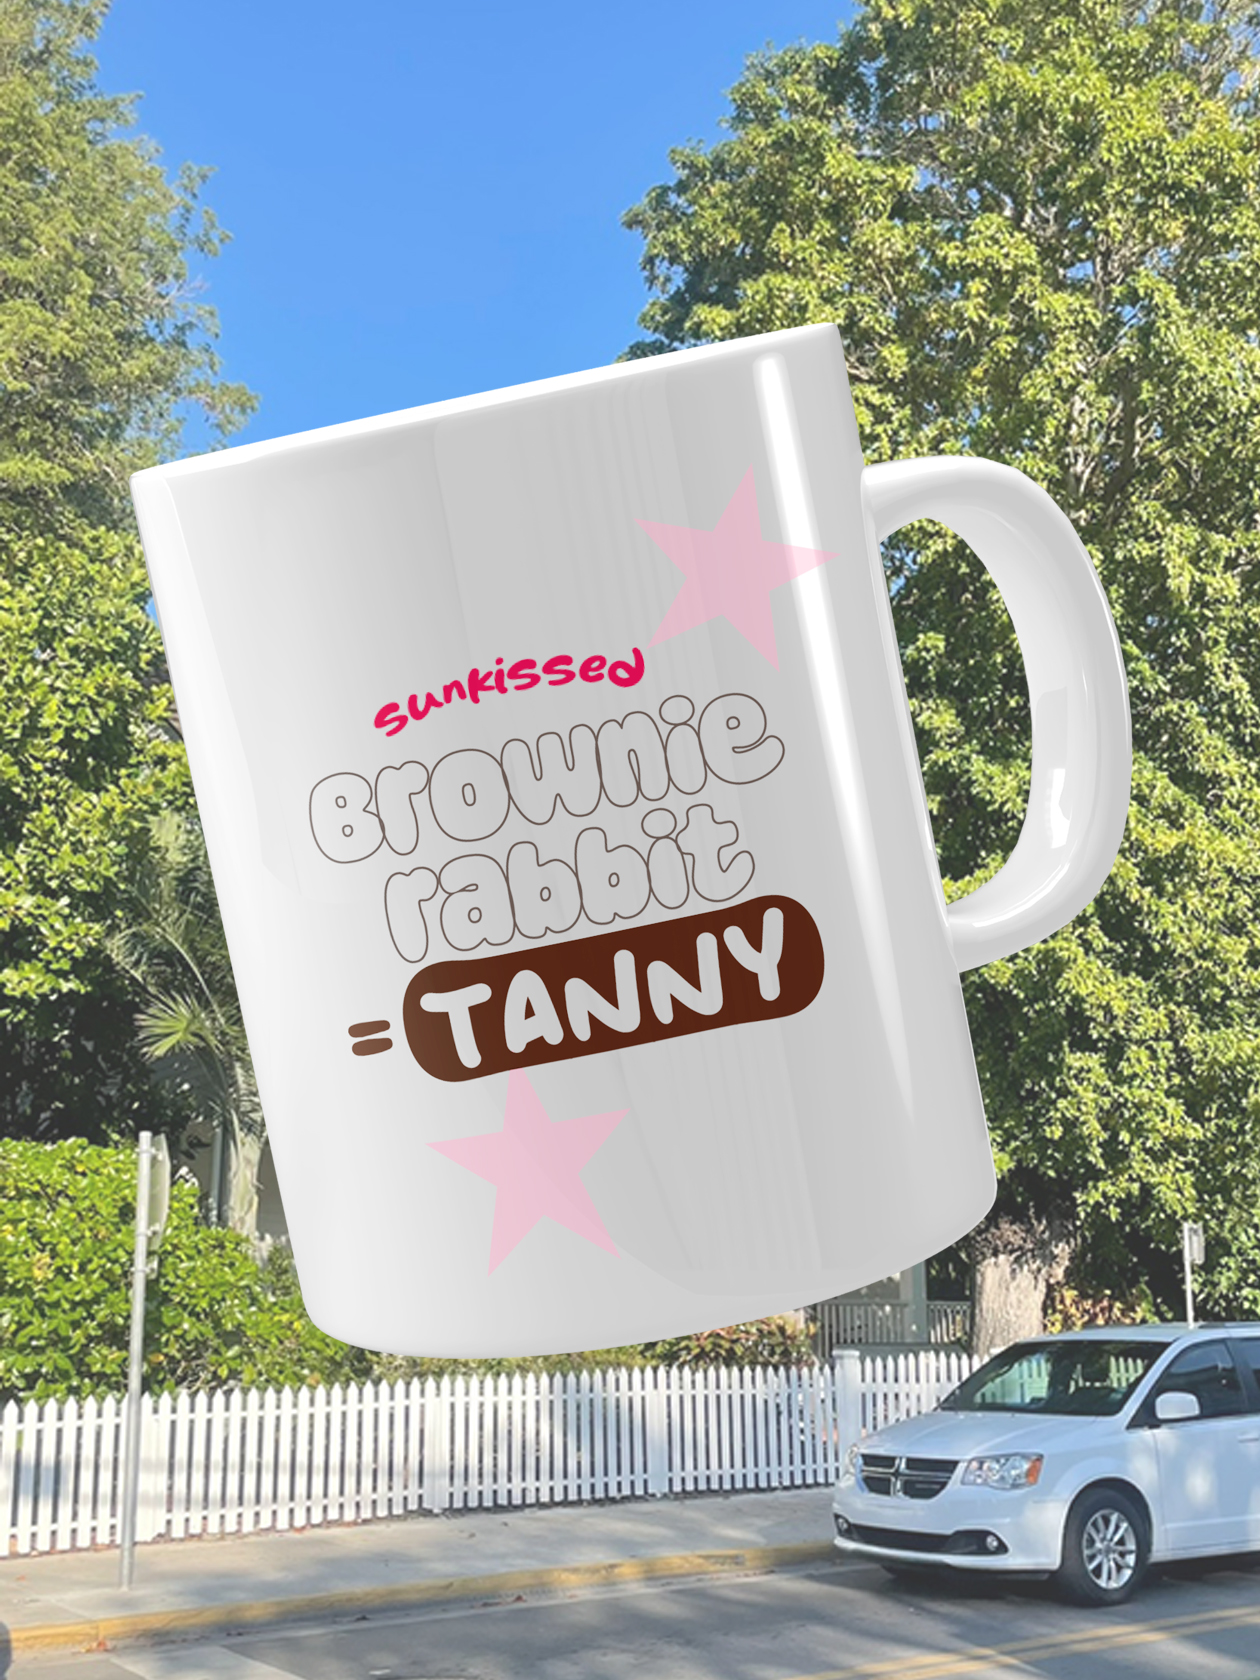 brownie rabbit = tanny mug cup